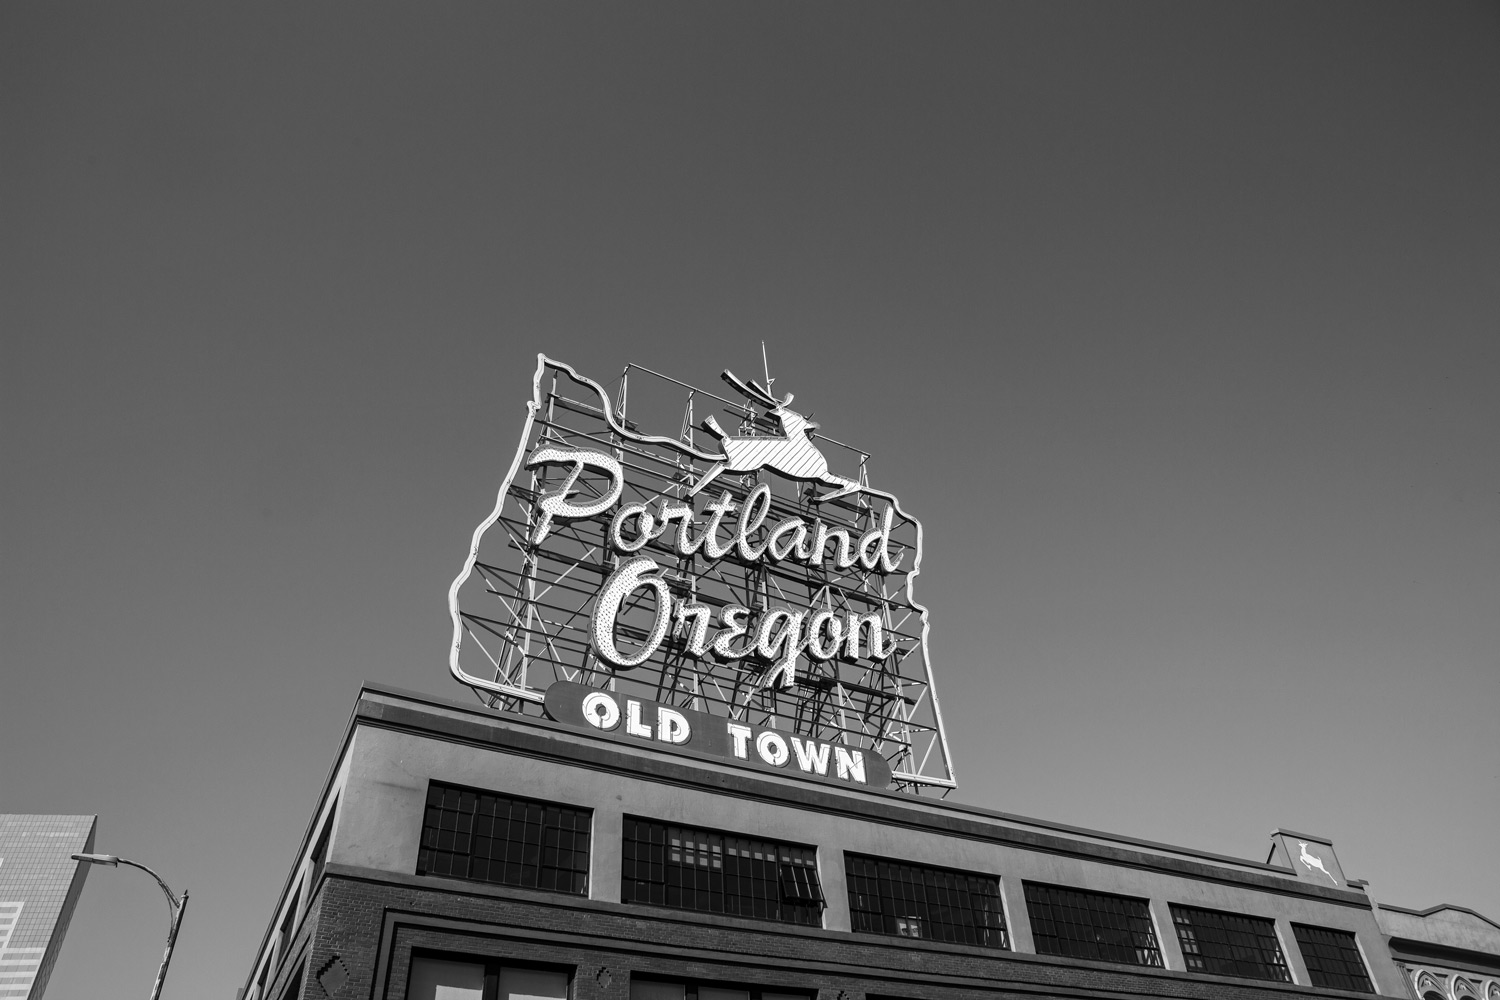 The White Stag sign in Portland, Oregon